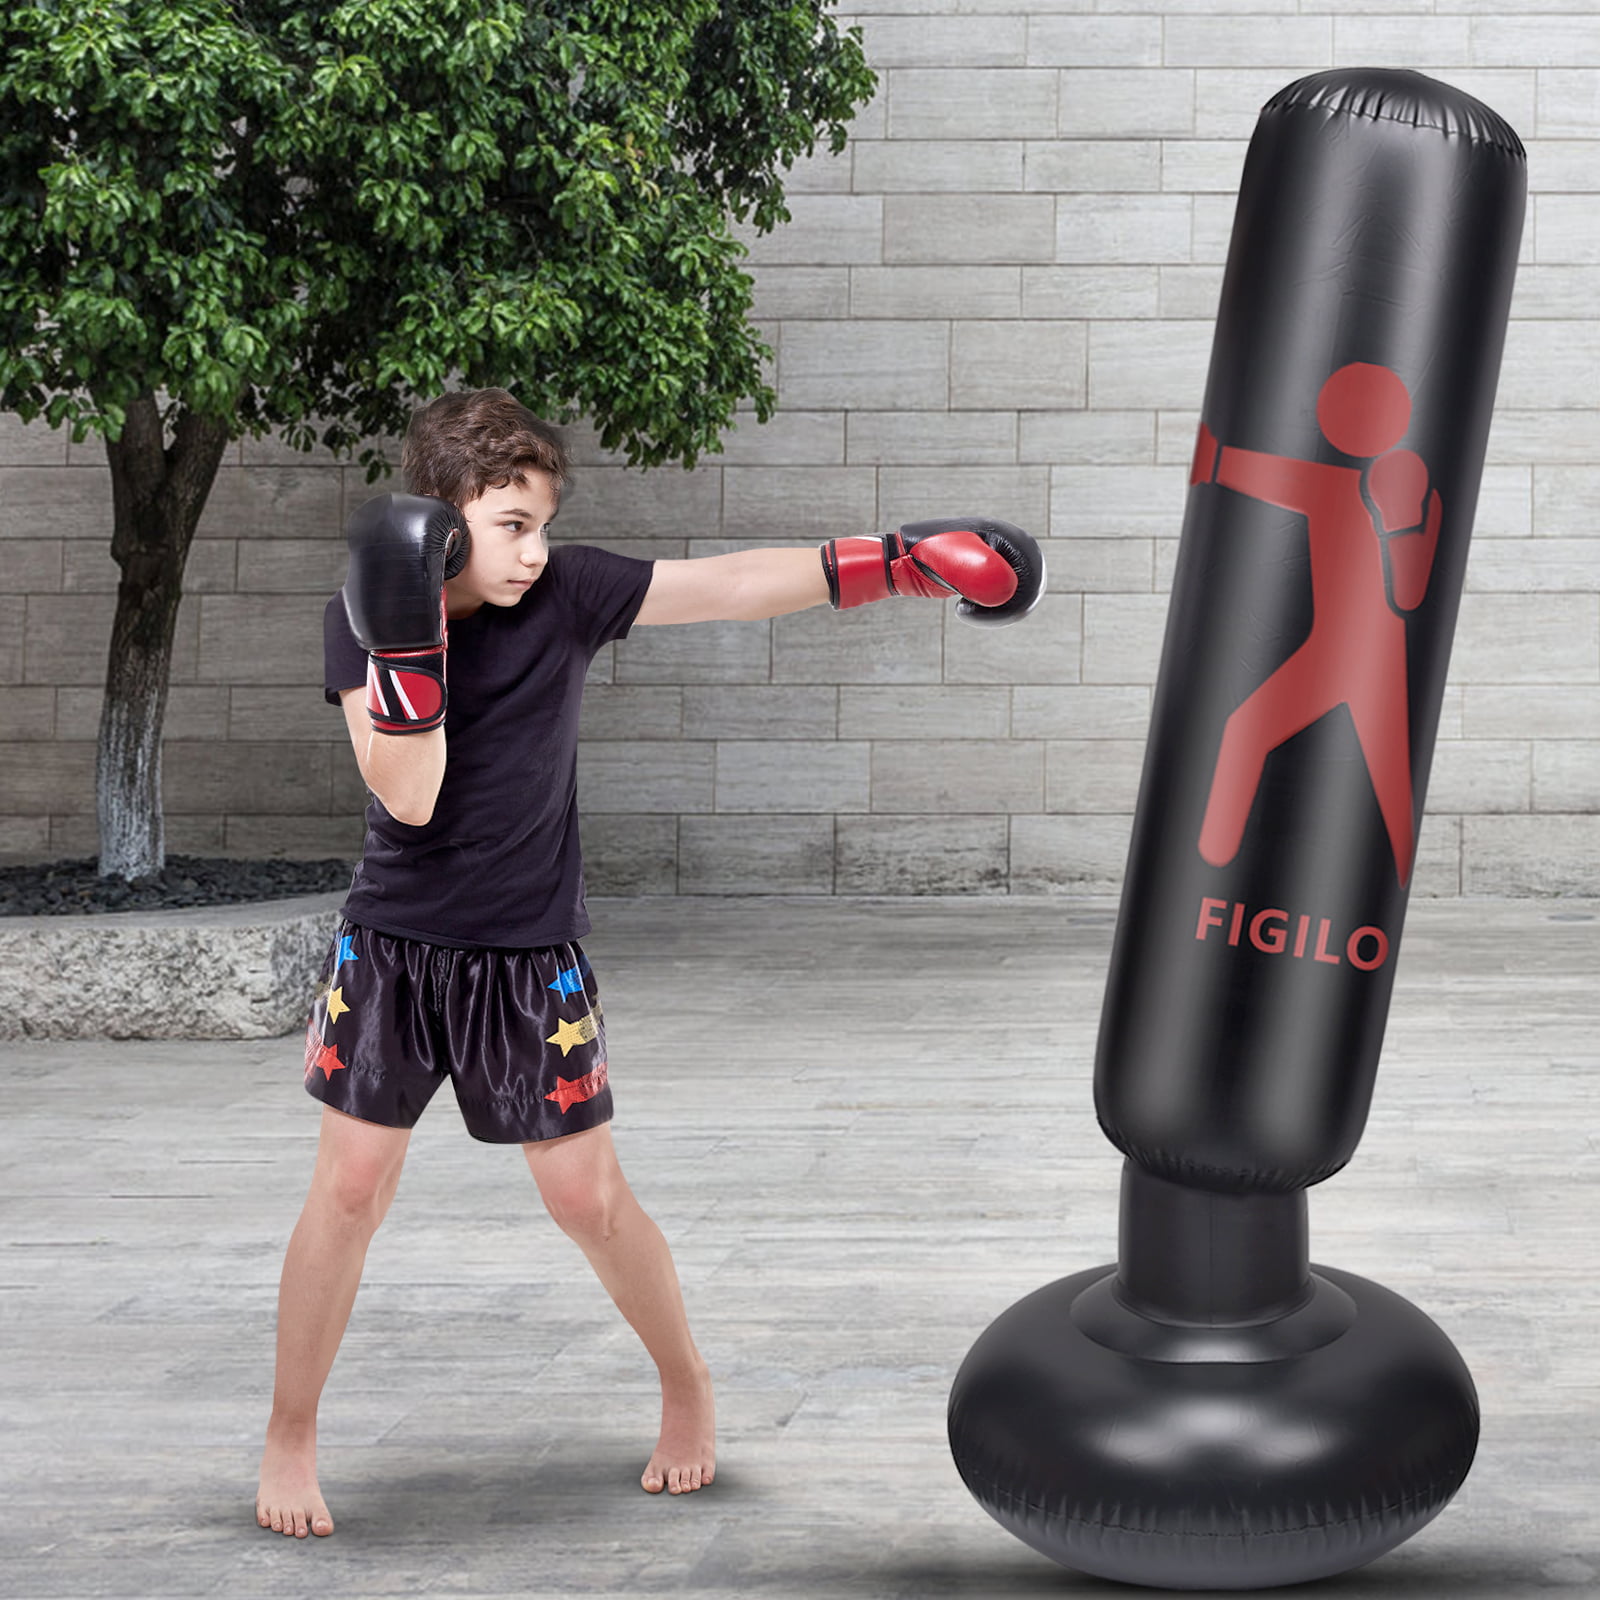 Inflatable Boxing Punching Bag Tumbler Sandbag Fitness Training Adult Kids Gift 